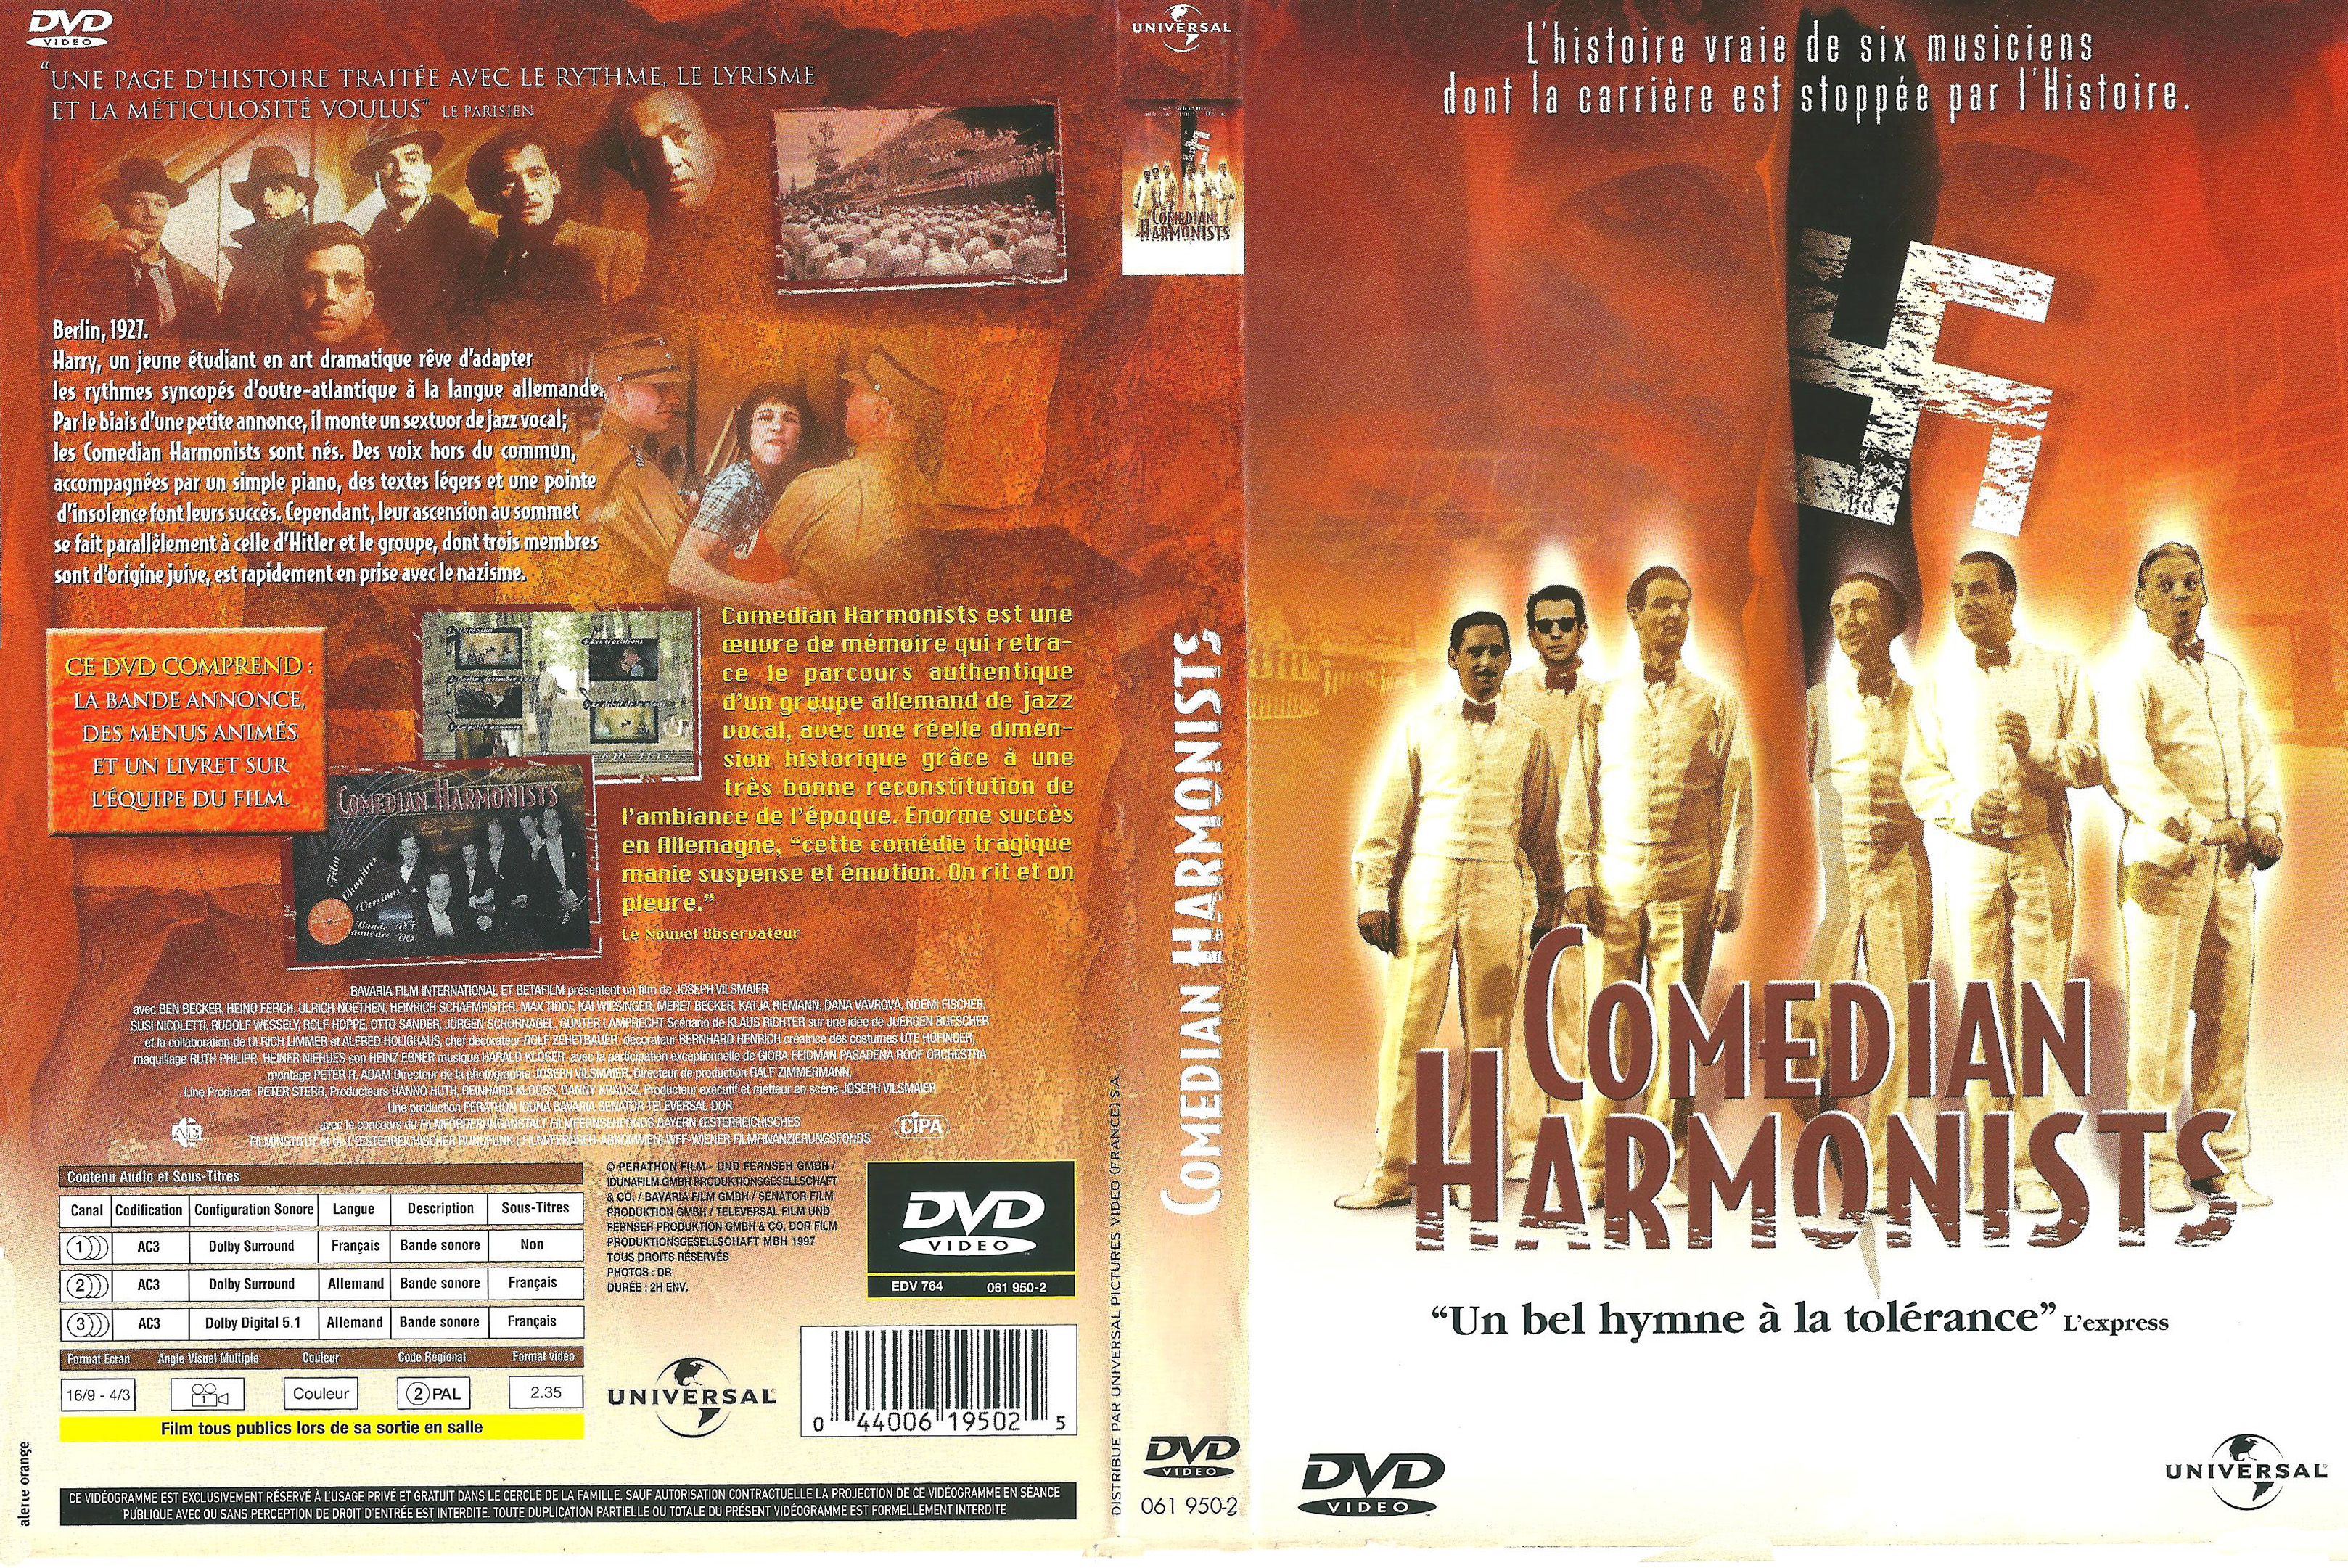 Jaquette DVD Comedian harmonists